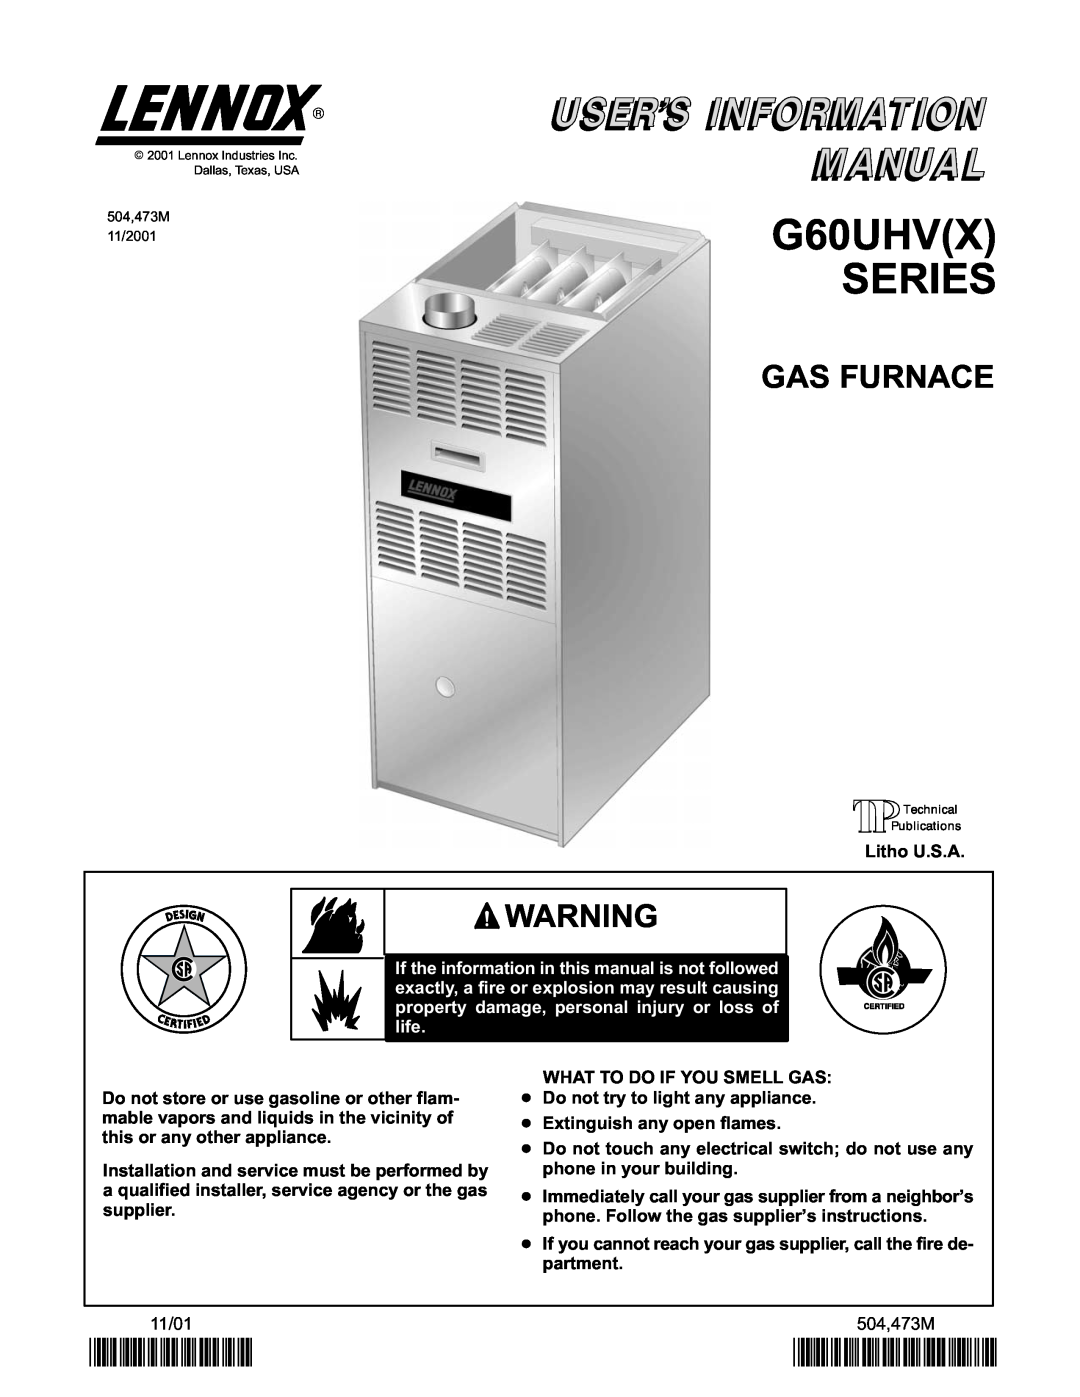 Lennox Hearth G60UHV(X) manual G60UHVX SERIES, Gas Furnace, 2P1101, P504473M 